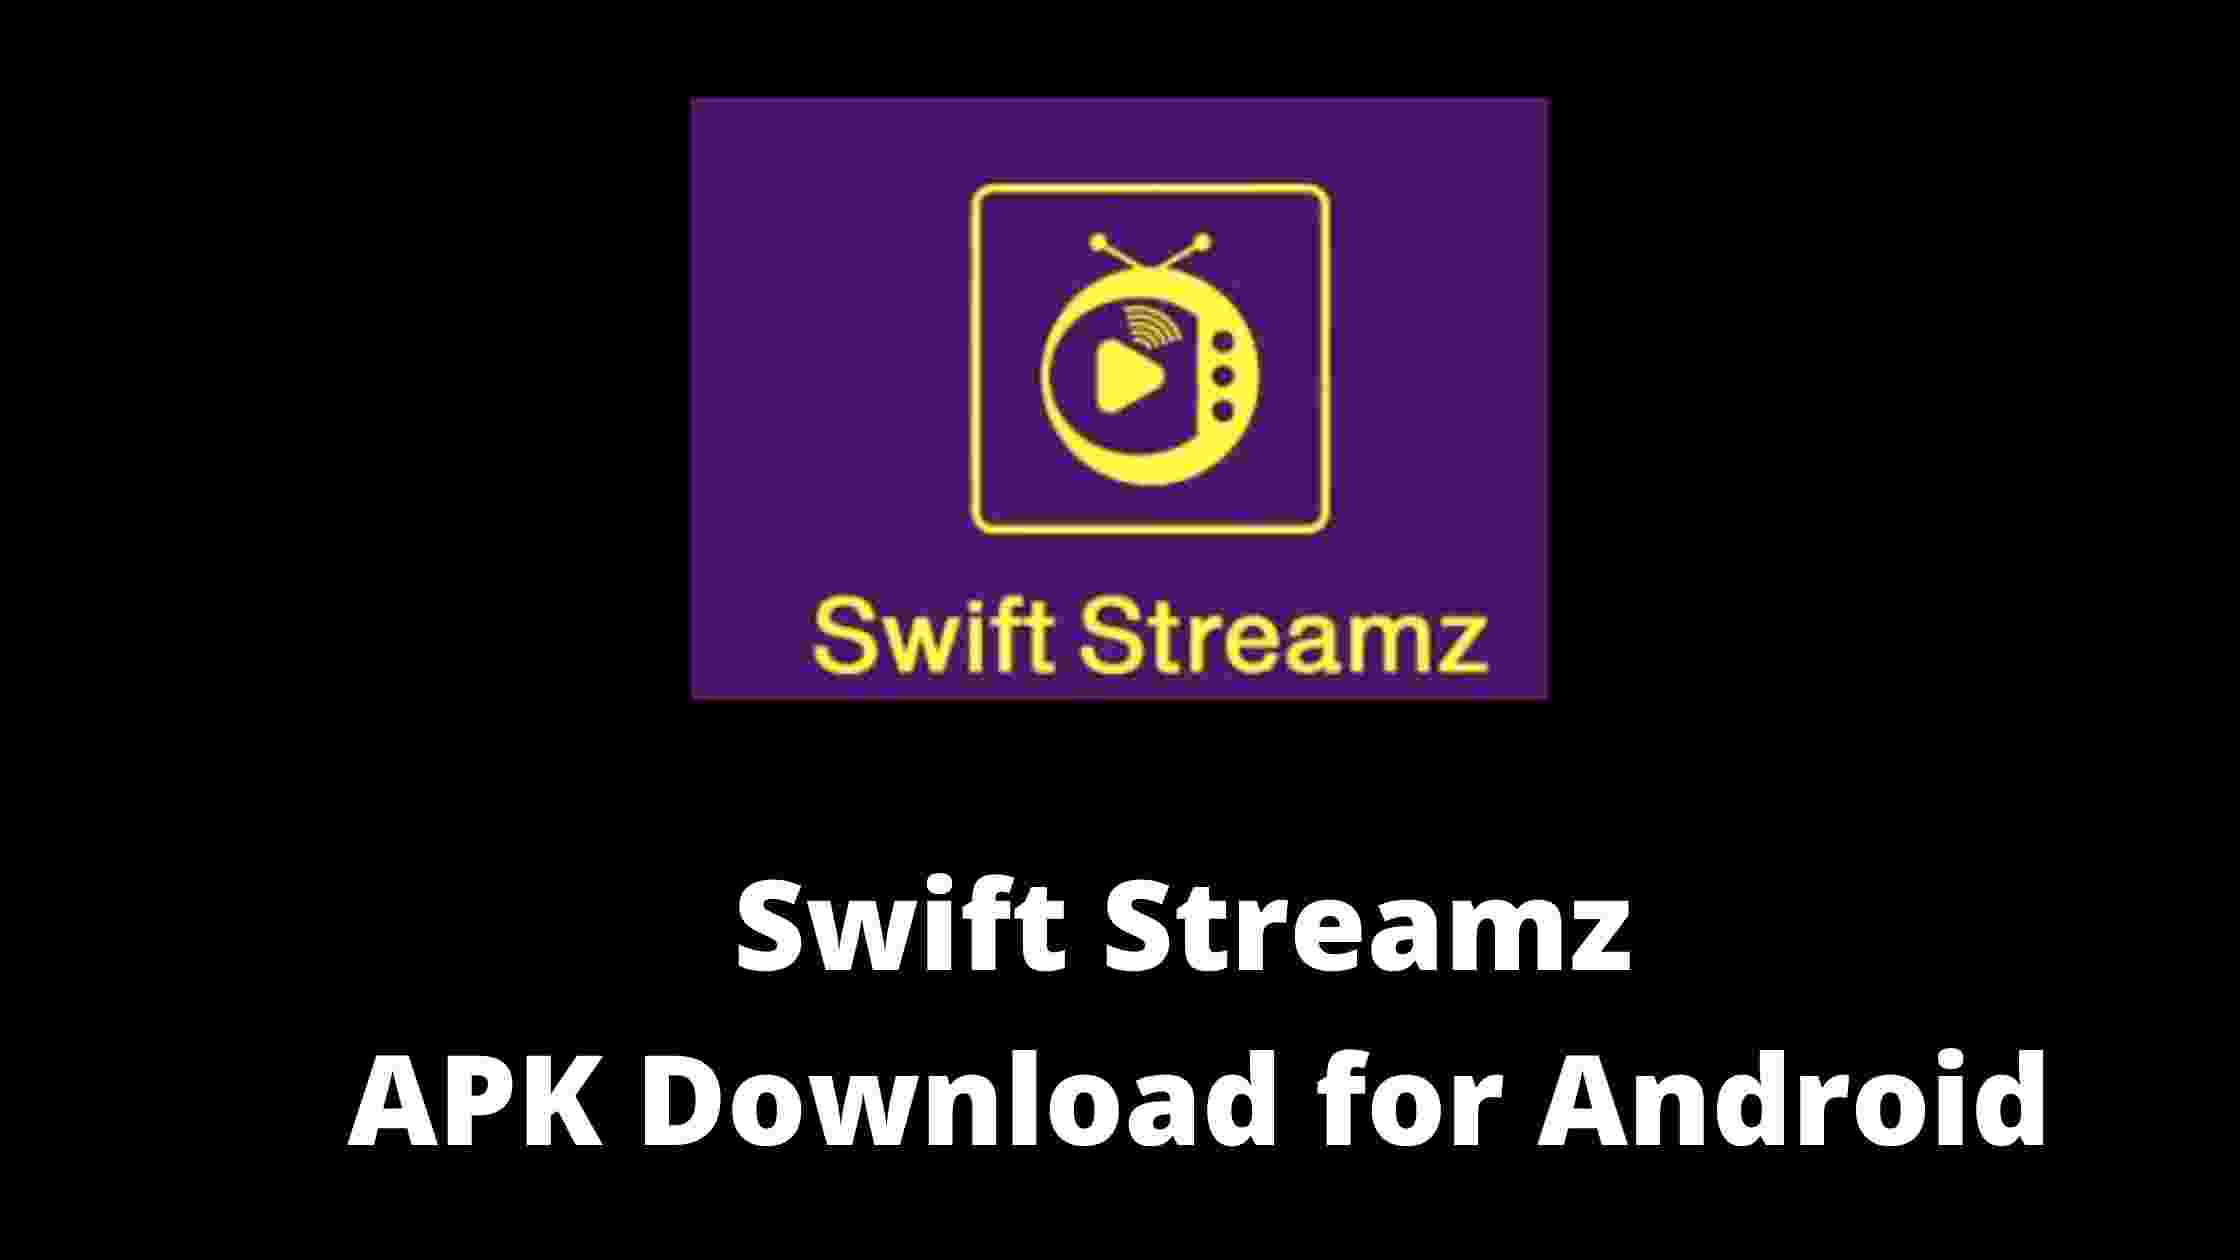 Swift Streamz APK download